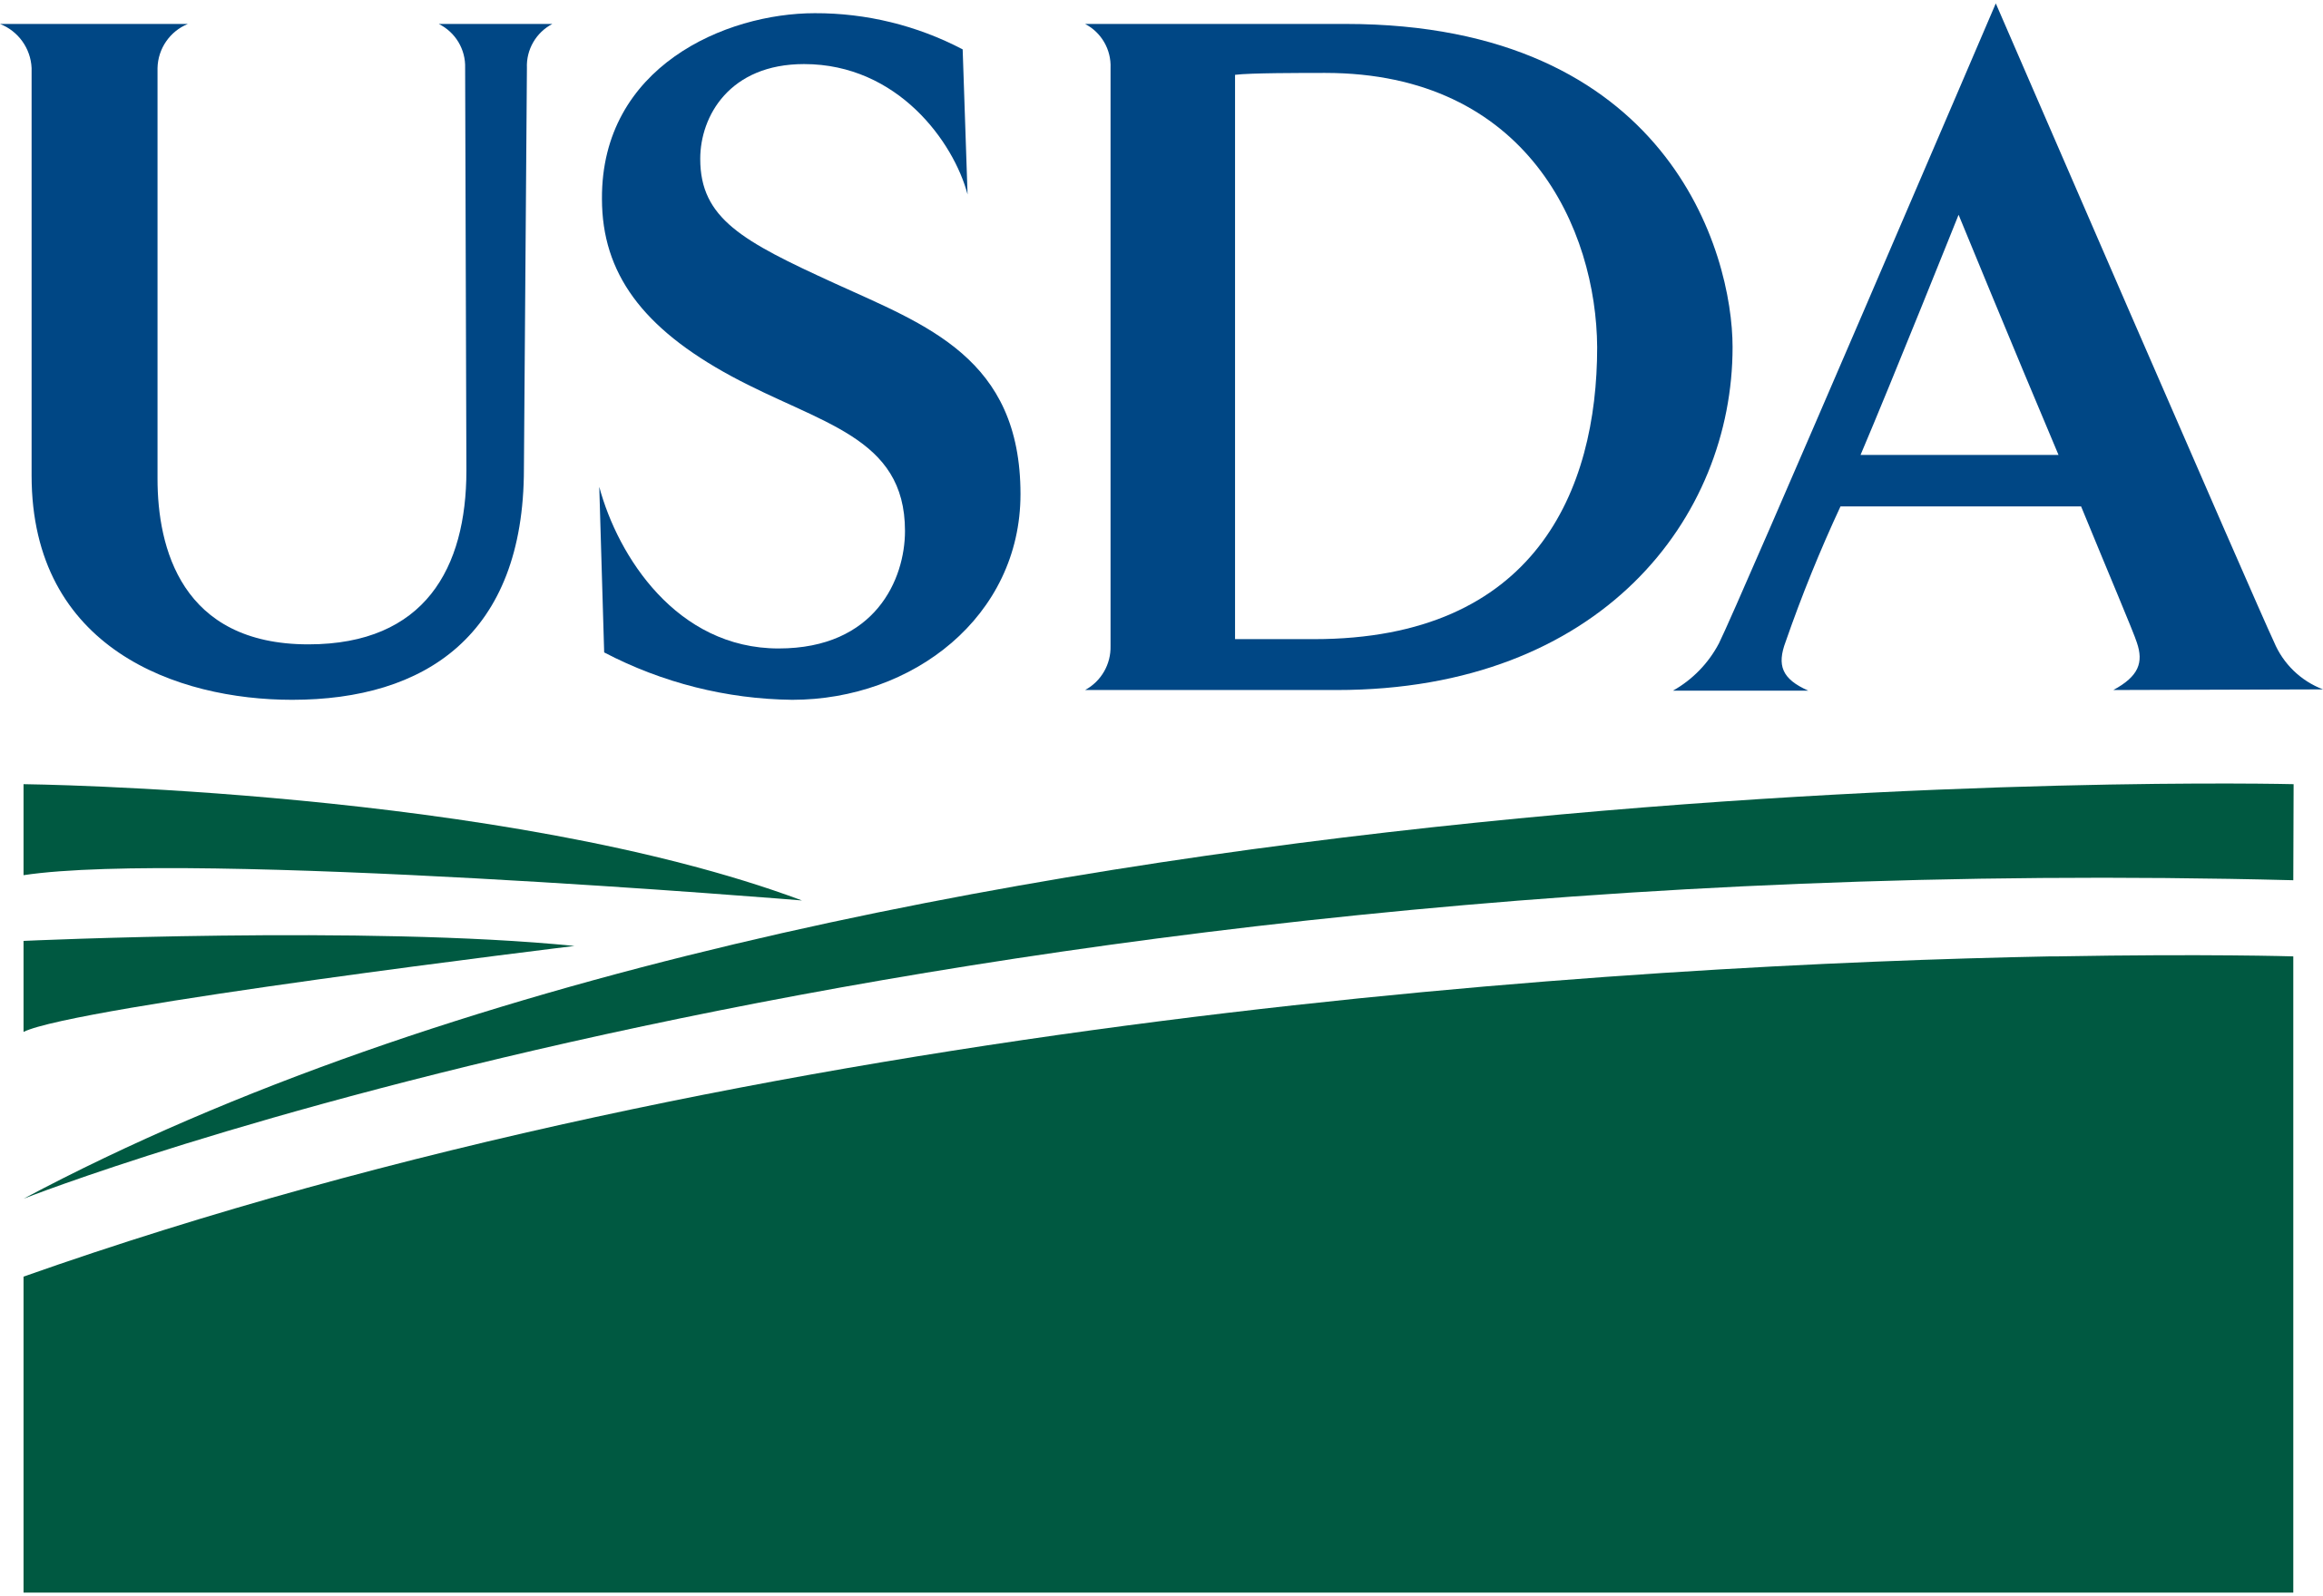 USDA Economics, Statistics and Market Information System Data Added to U.S. Documents Masterfile